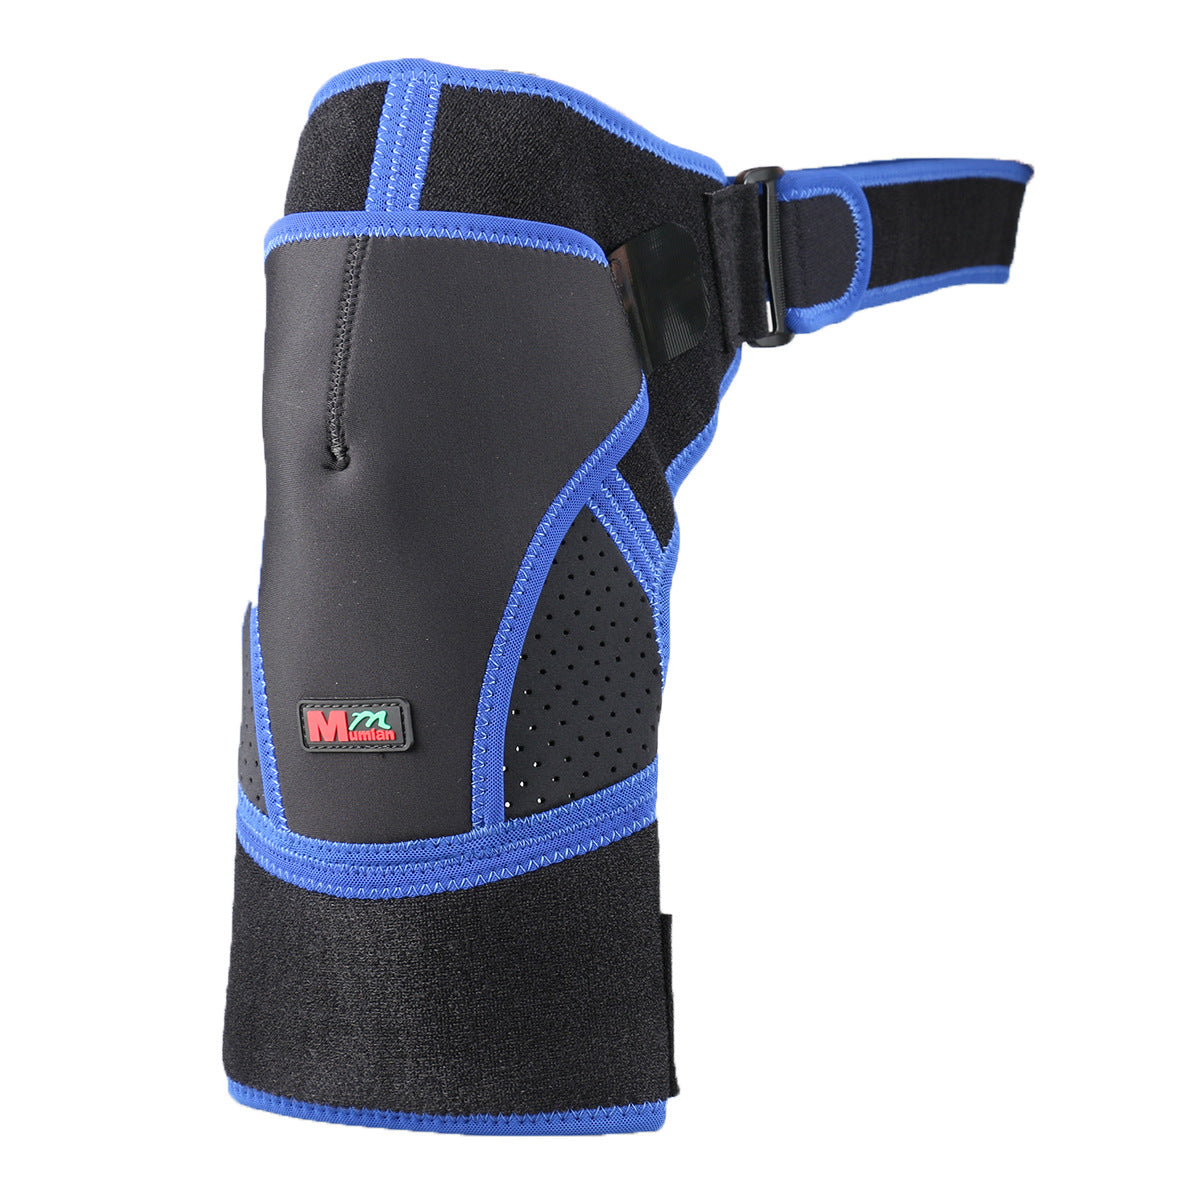 Adjustable Shoulder Support Brace,Rotator Cuff Support for Injury Prev ...